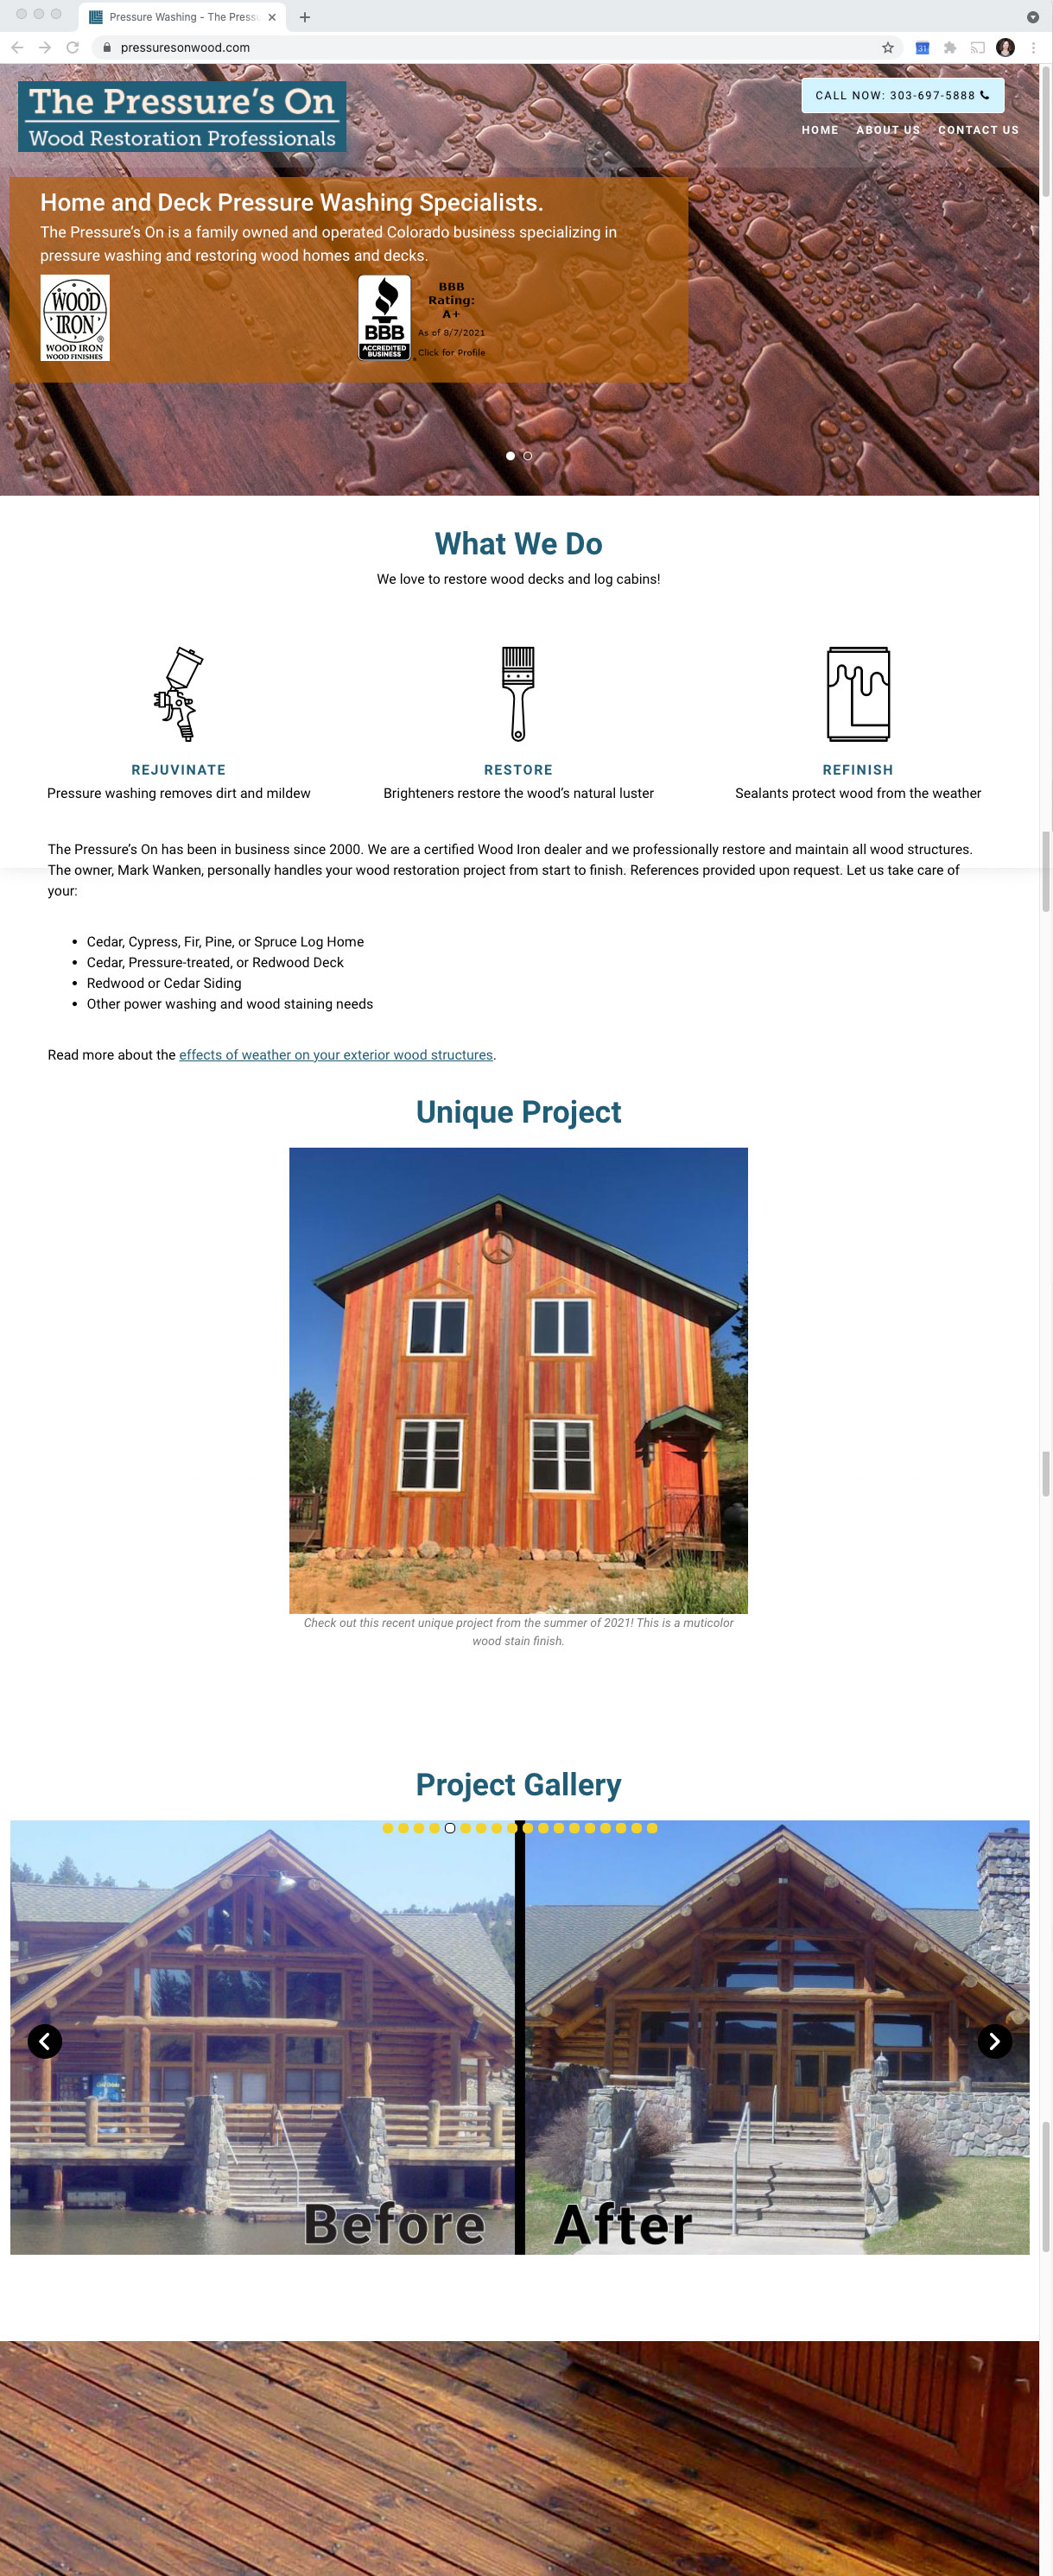 screenshot of a wood restoration professional's website